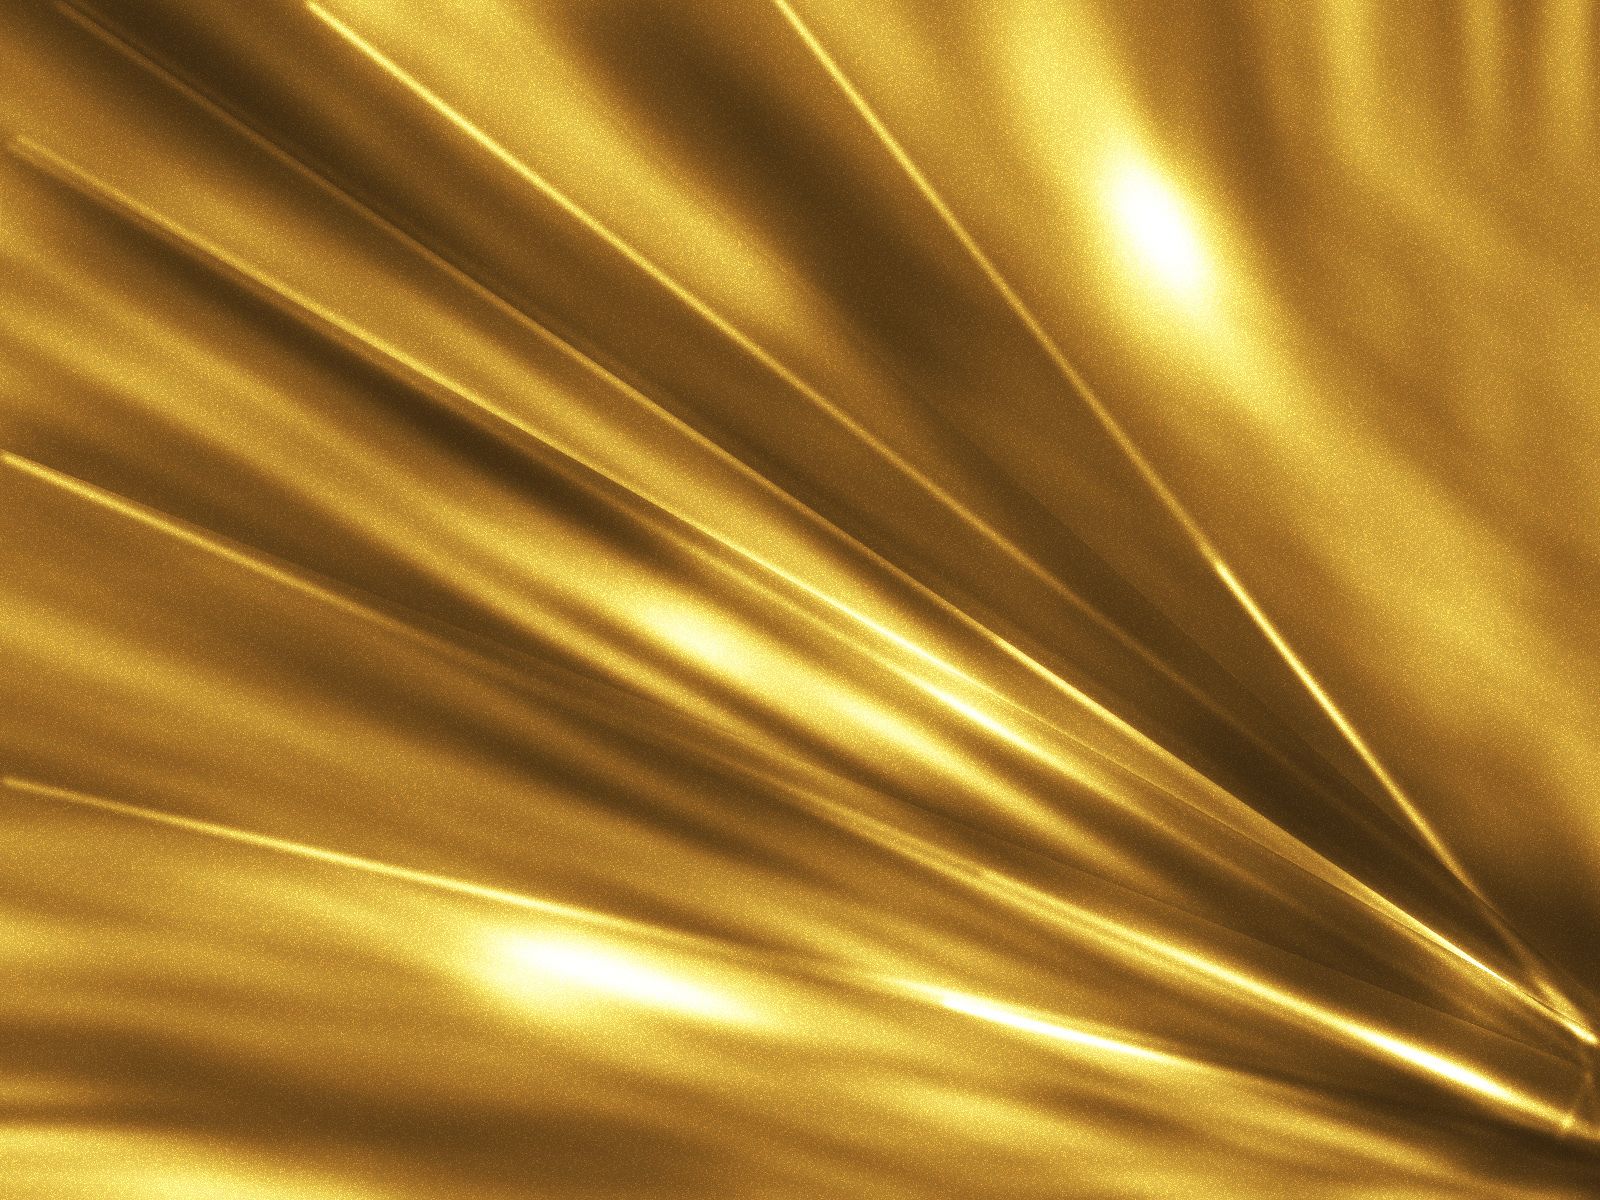 shiny gold wallpaper hd free